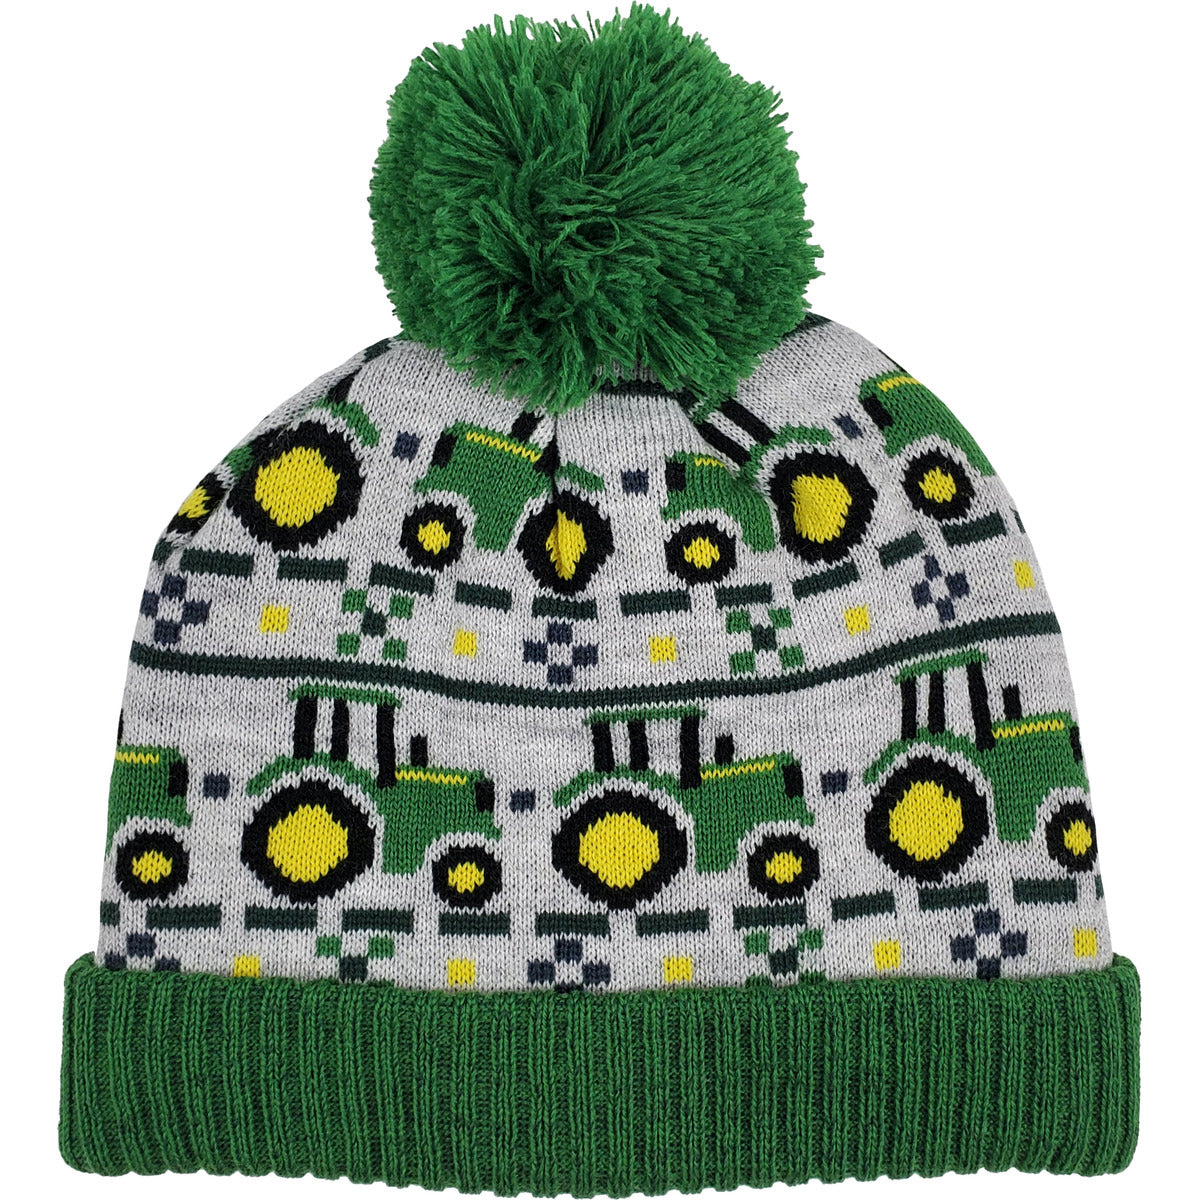 John Deere Toddler Boys' Winter Hat, Green/Grey - LP77235